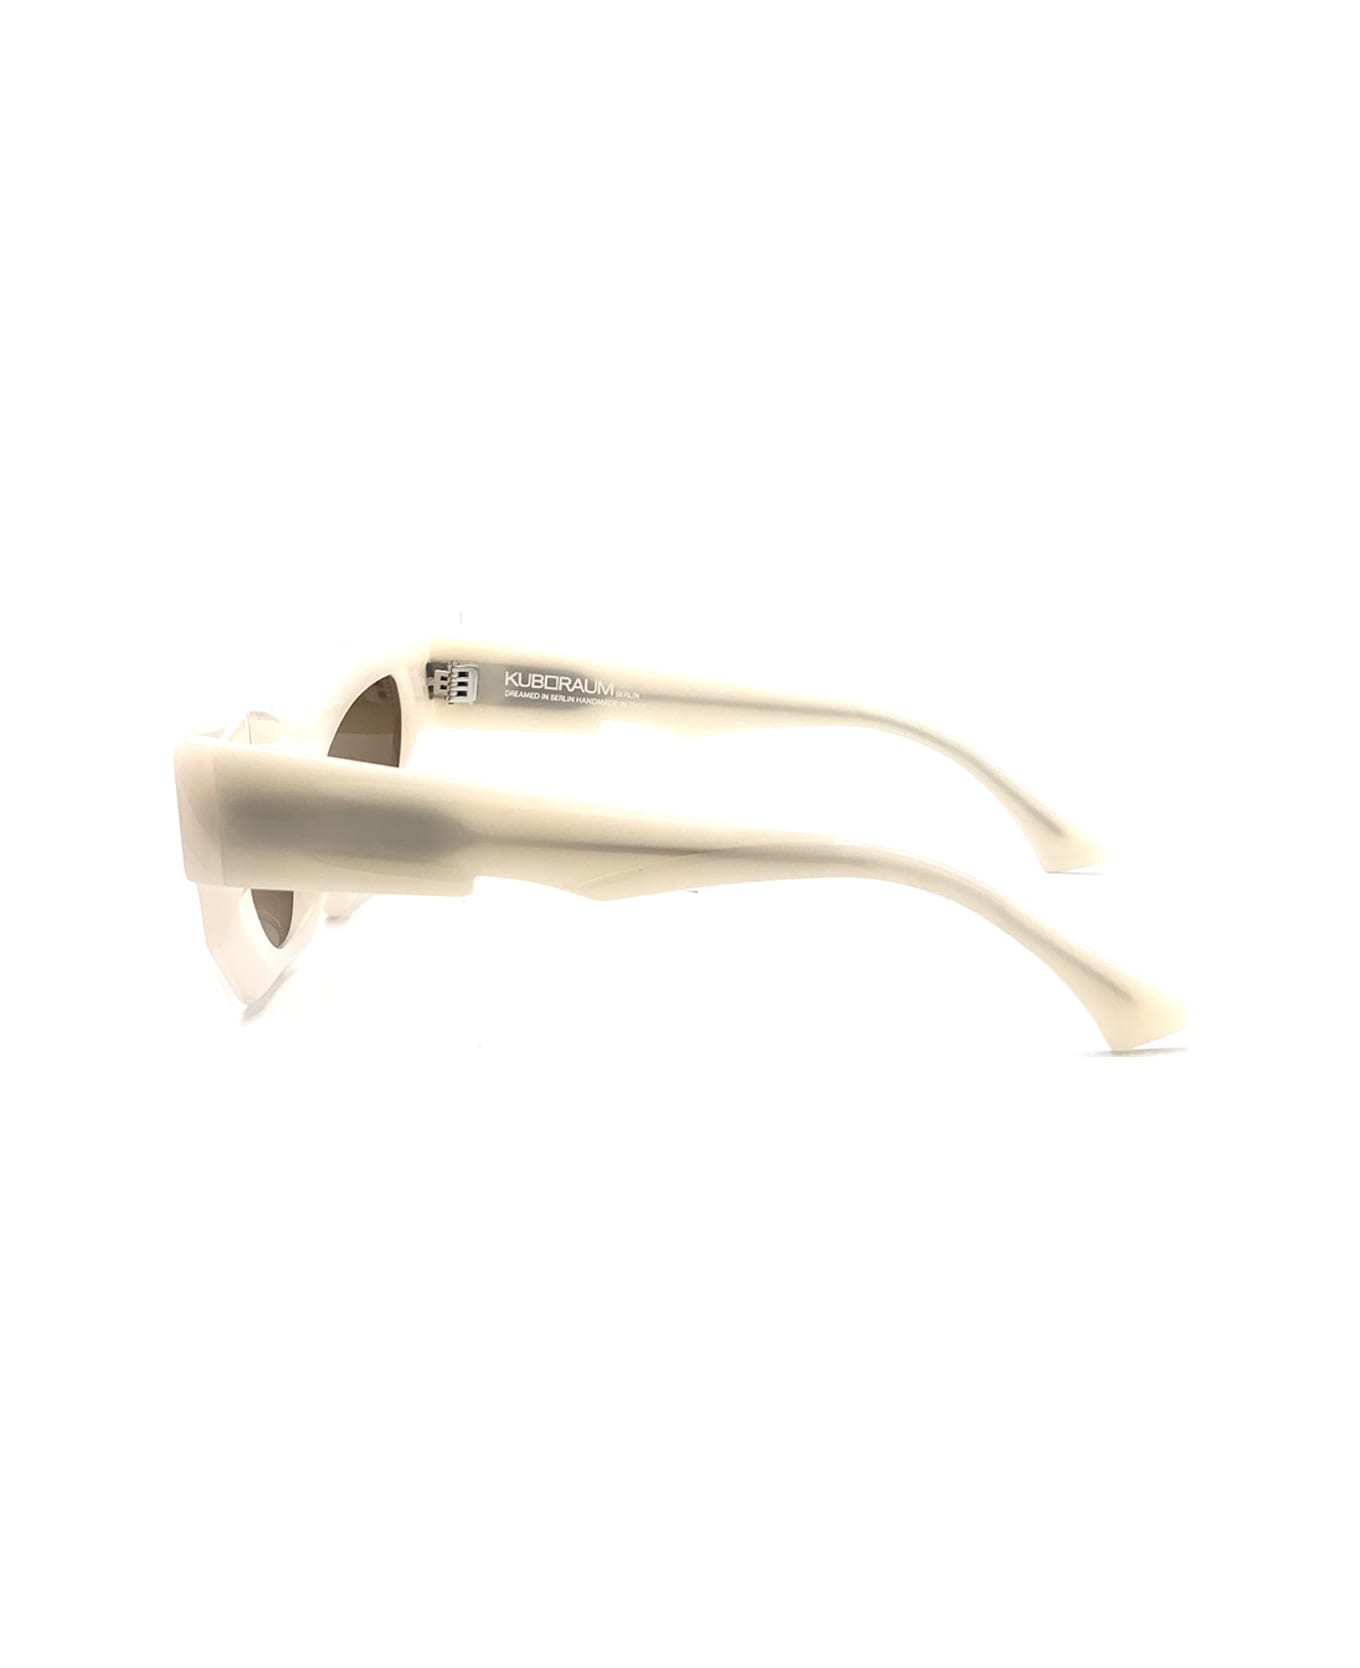 Kuboraum Maske F5 Wh Sunglasses - Bianco